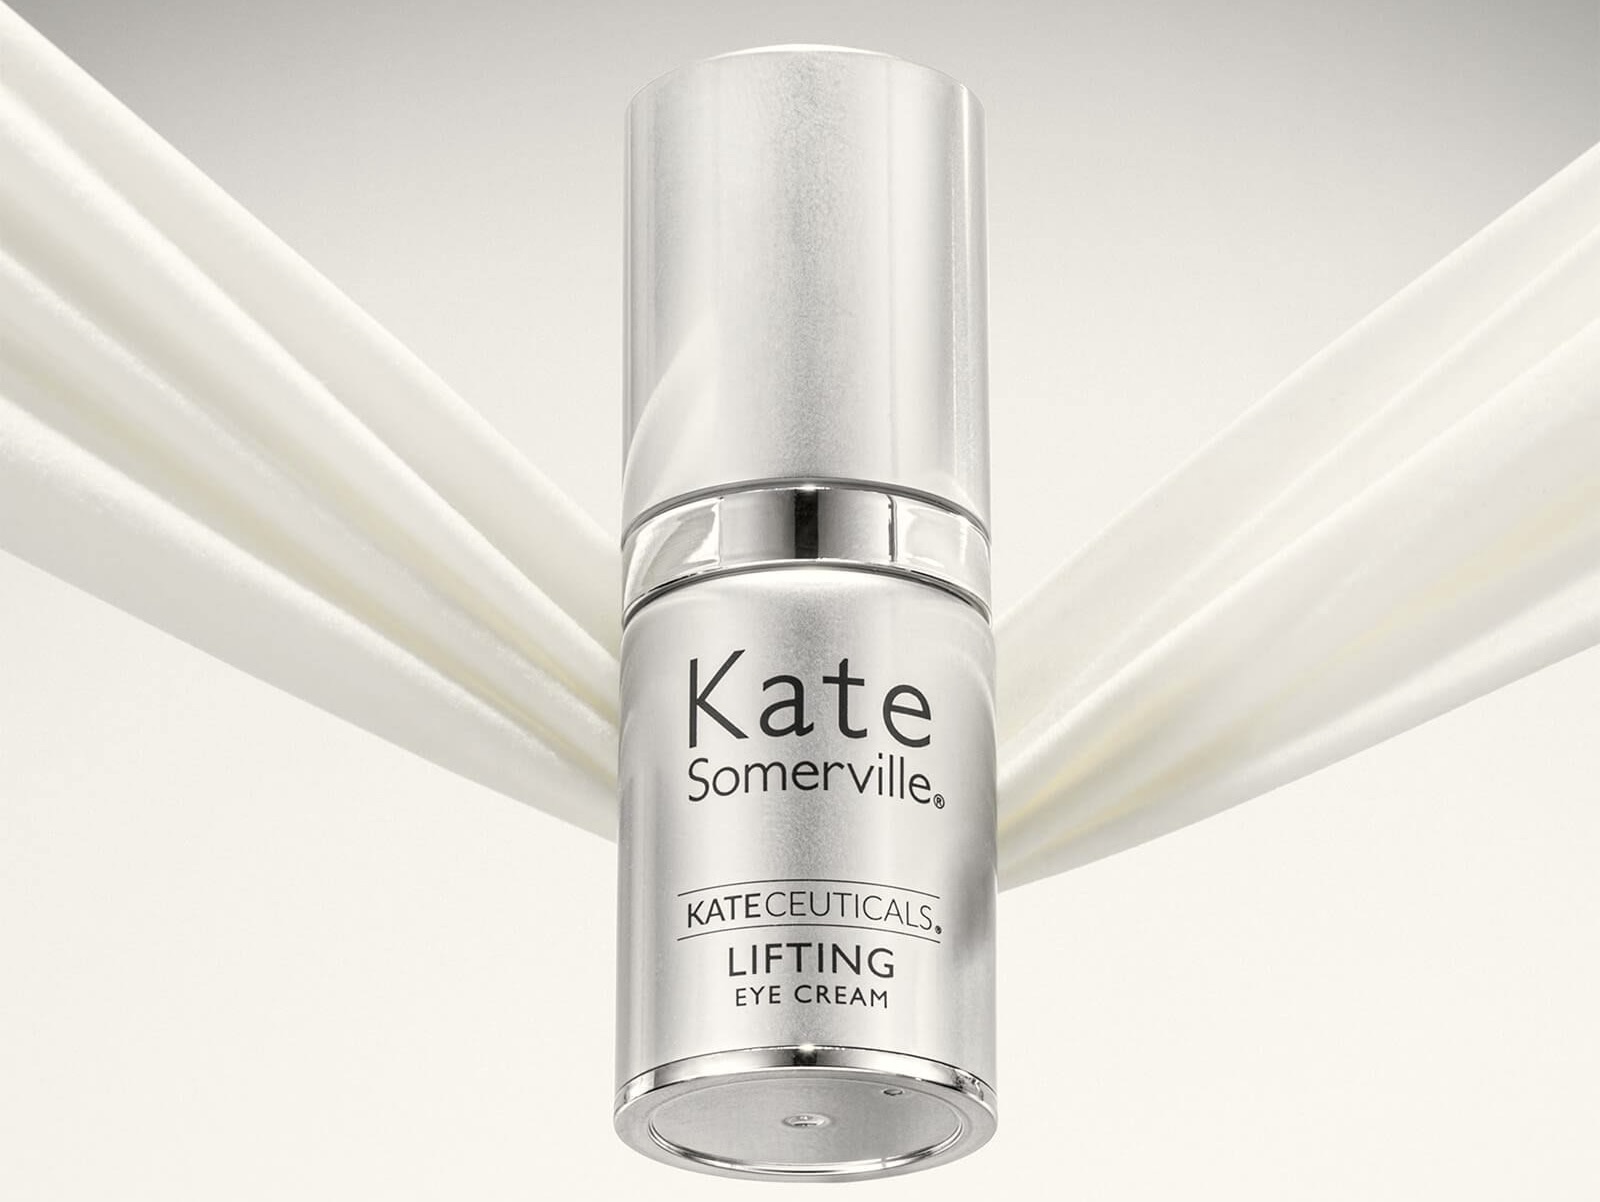 Kate Somerville Kateceuticals Lifting Eye Cream